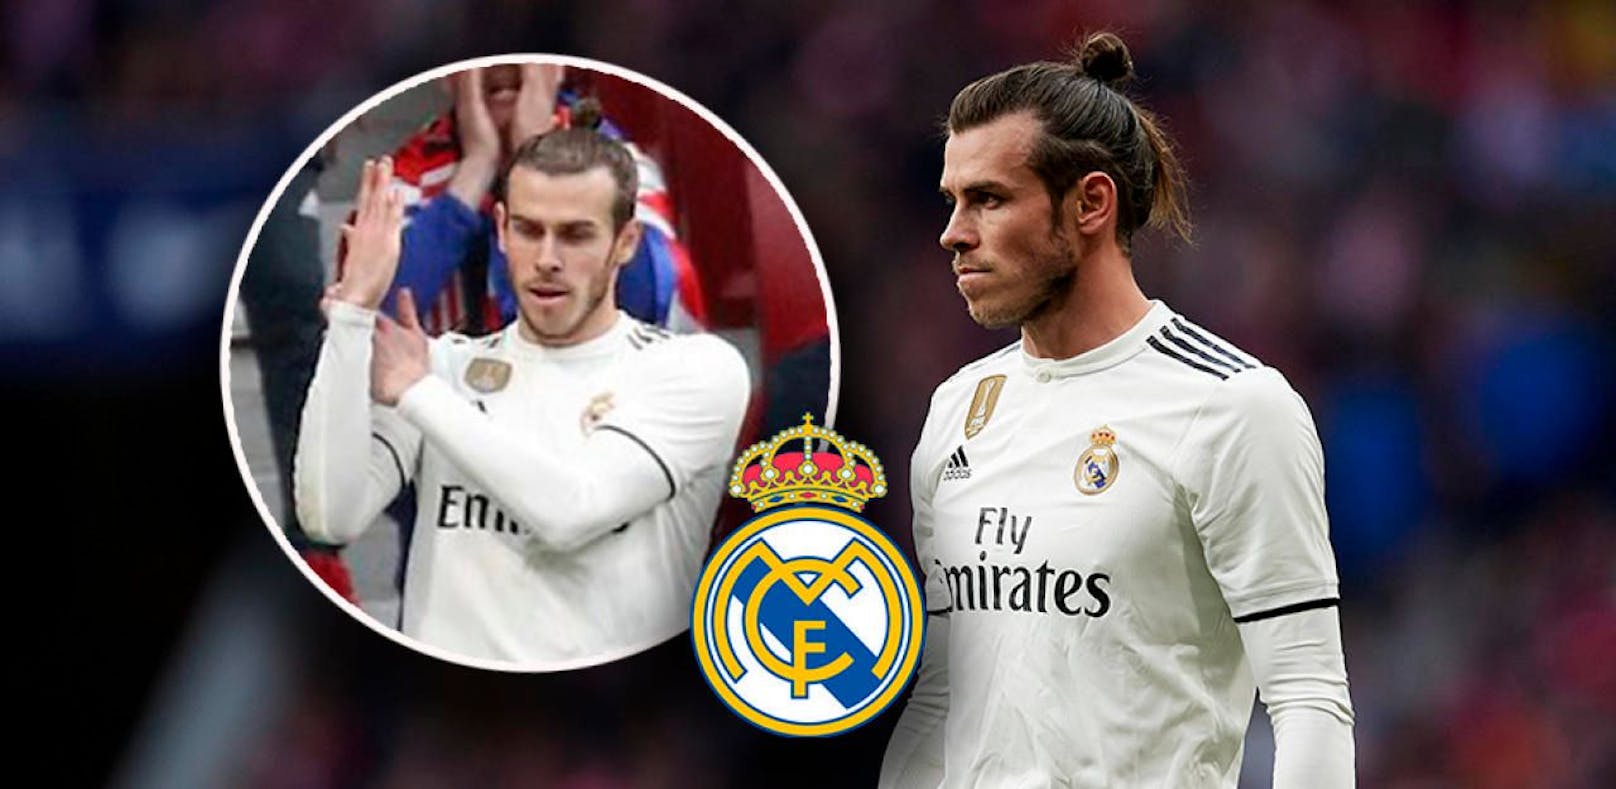 Angezeigt! Real-Star Bale droht Zwölf-Spiele-Sperre